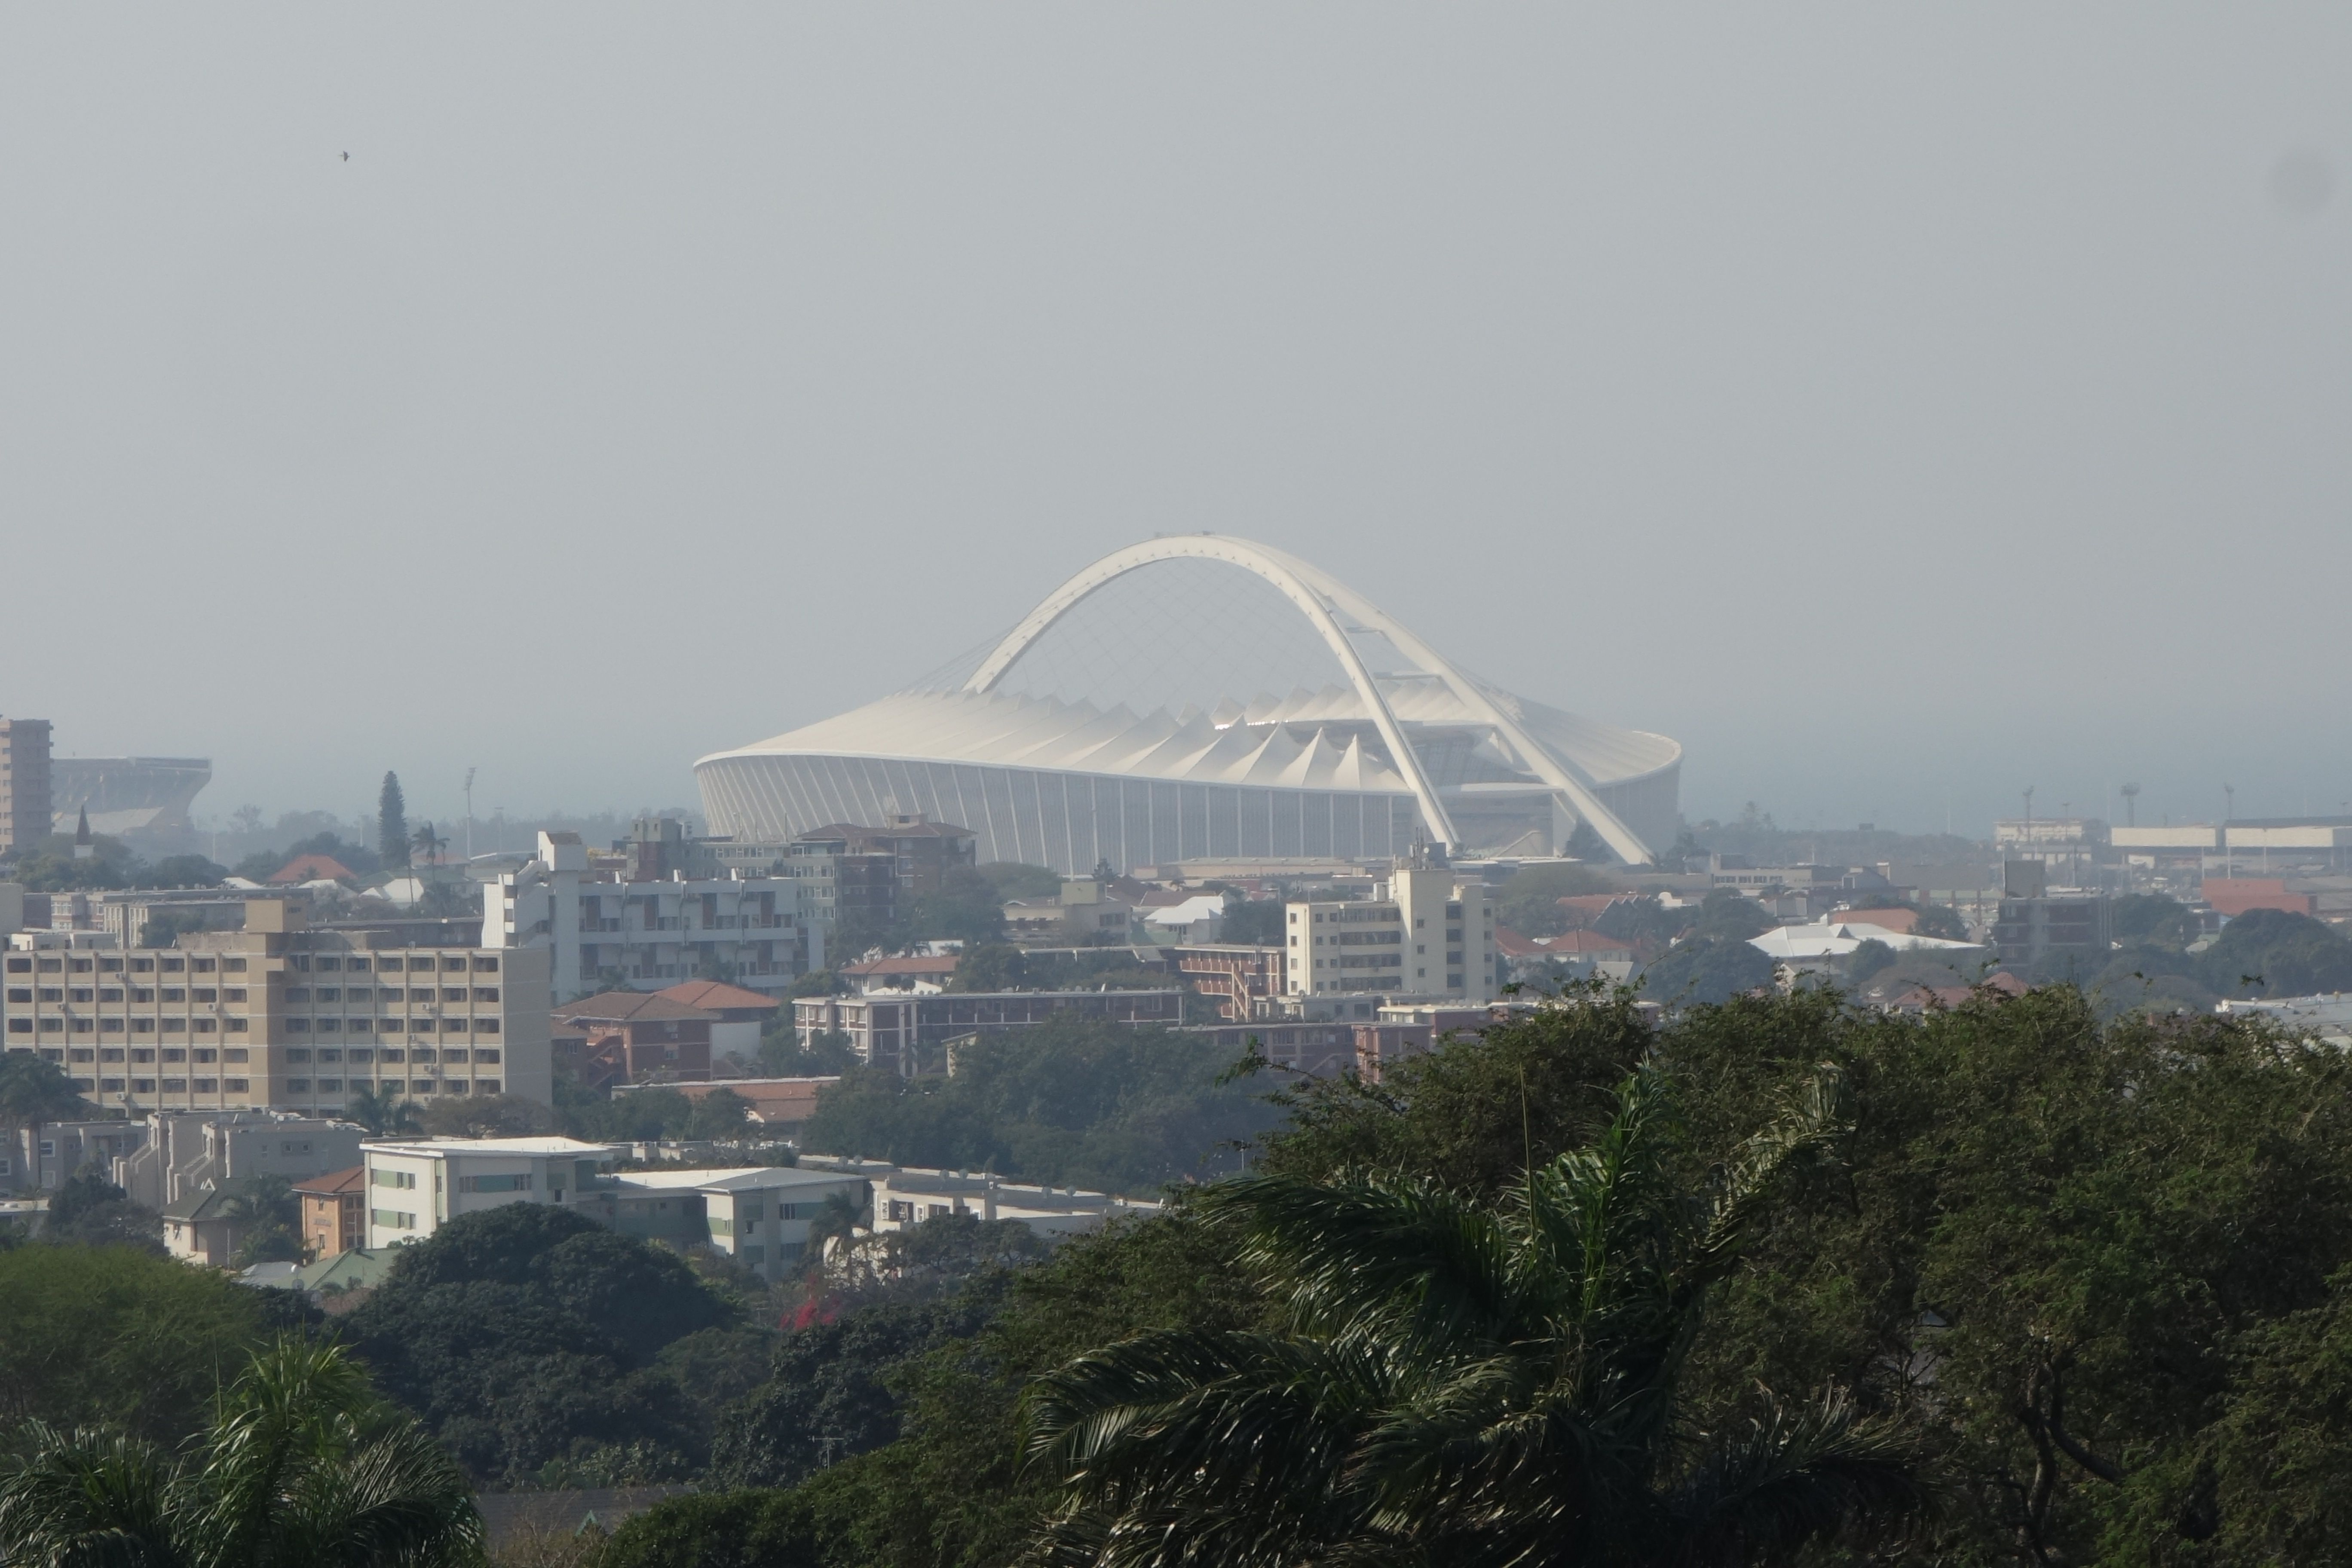 Urban in Durban